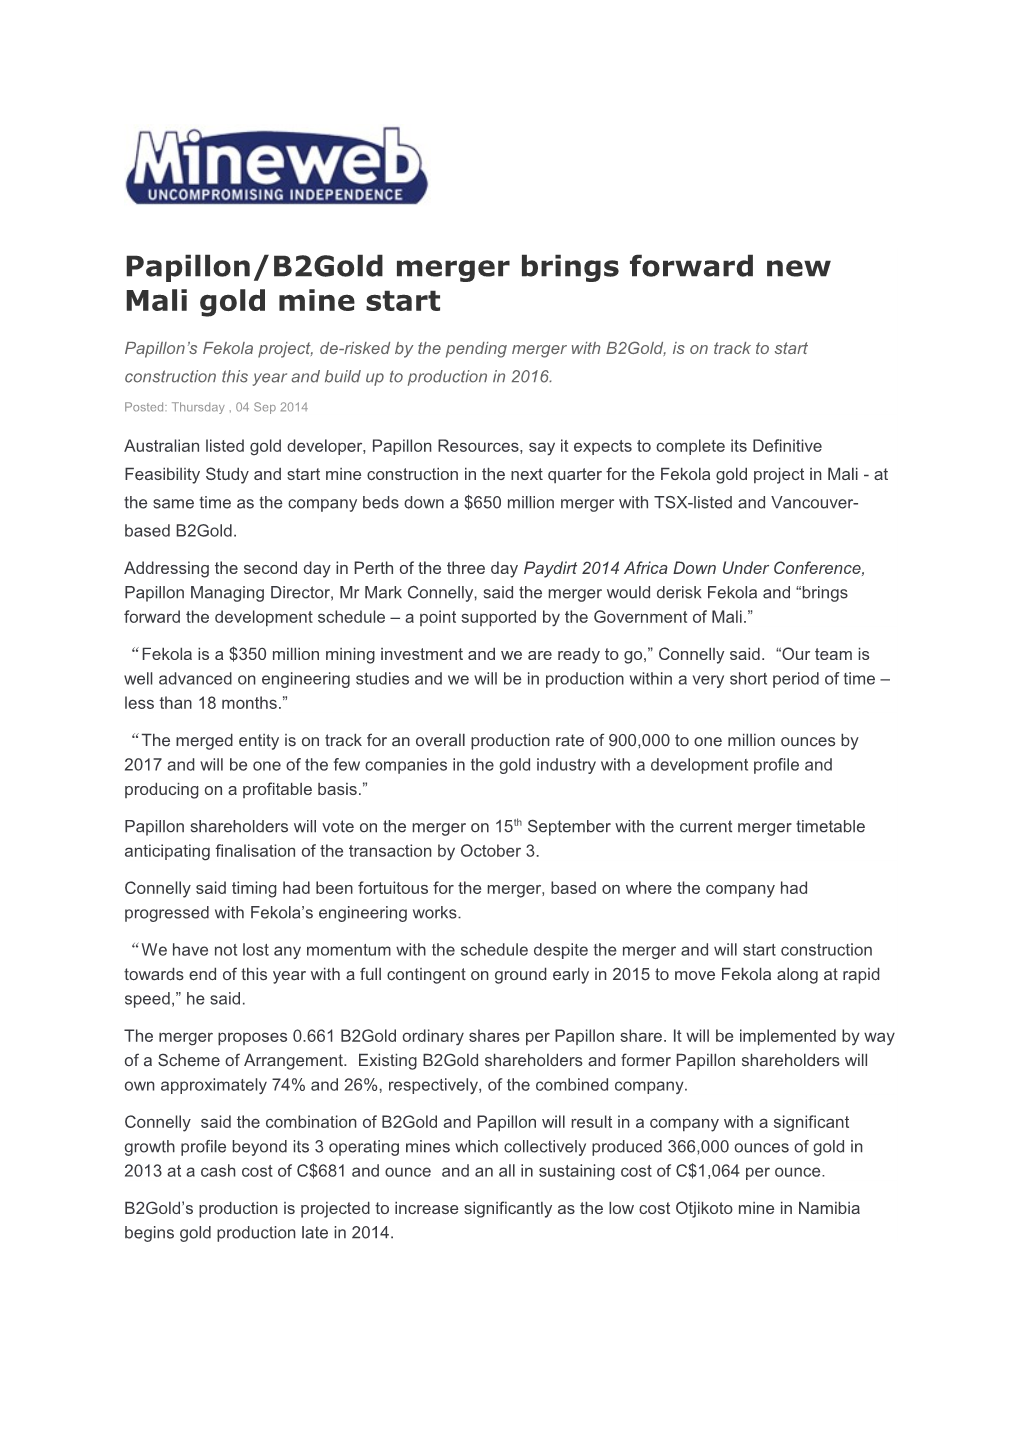 Papillon/B2gold Merger Brings Forward New Mali Gold Mine Start